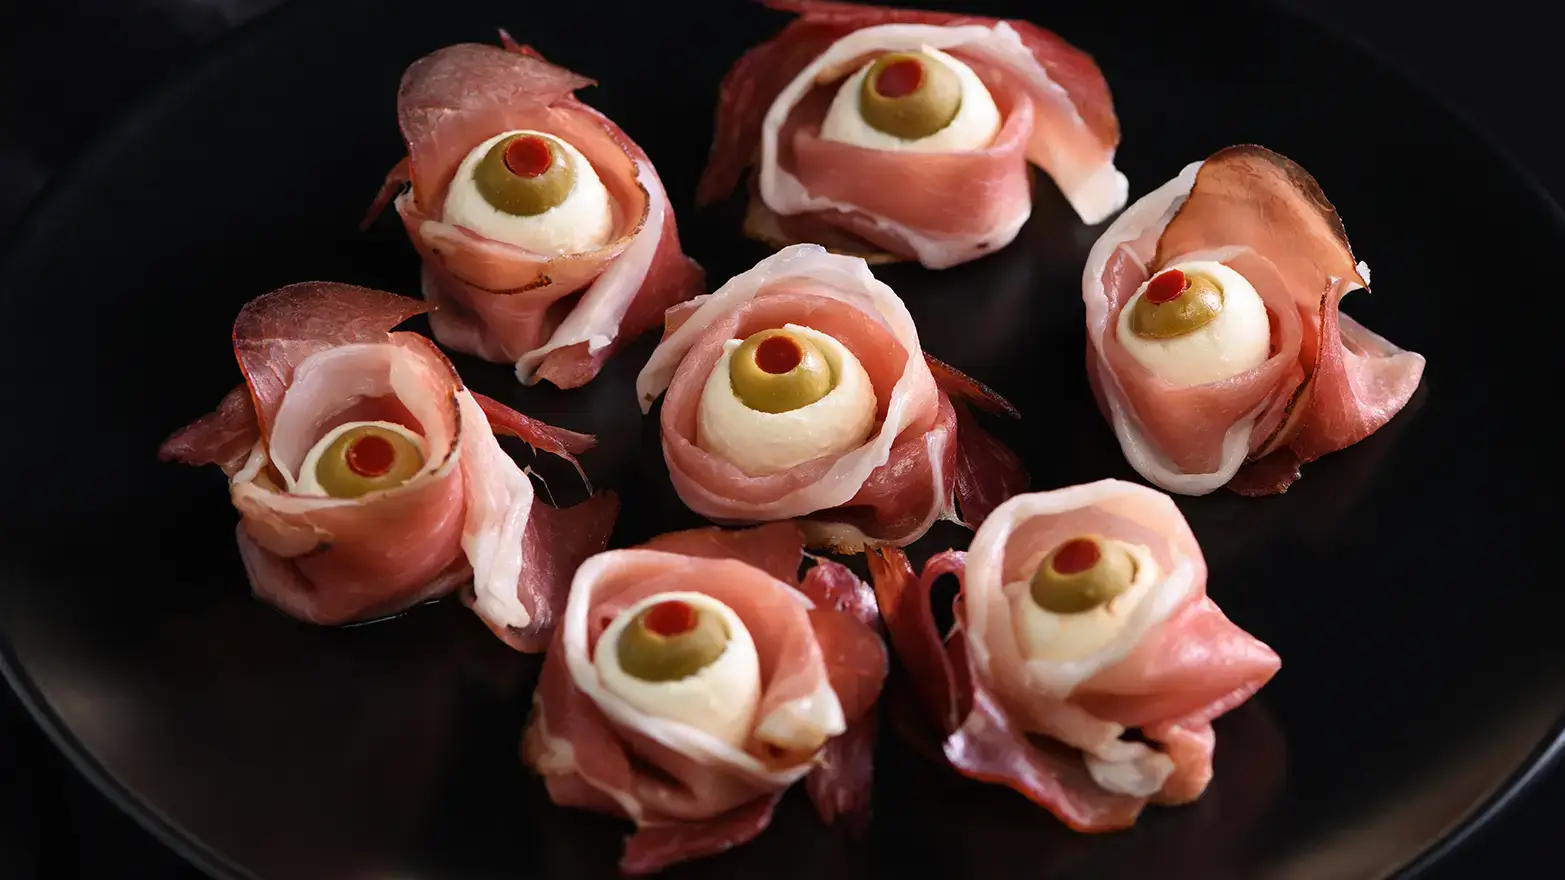 Halloween potluck dish with prosciutto wrapped eyeballs